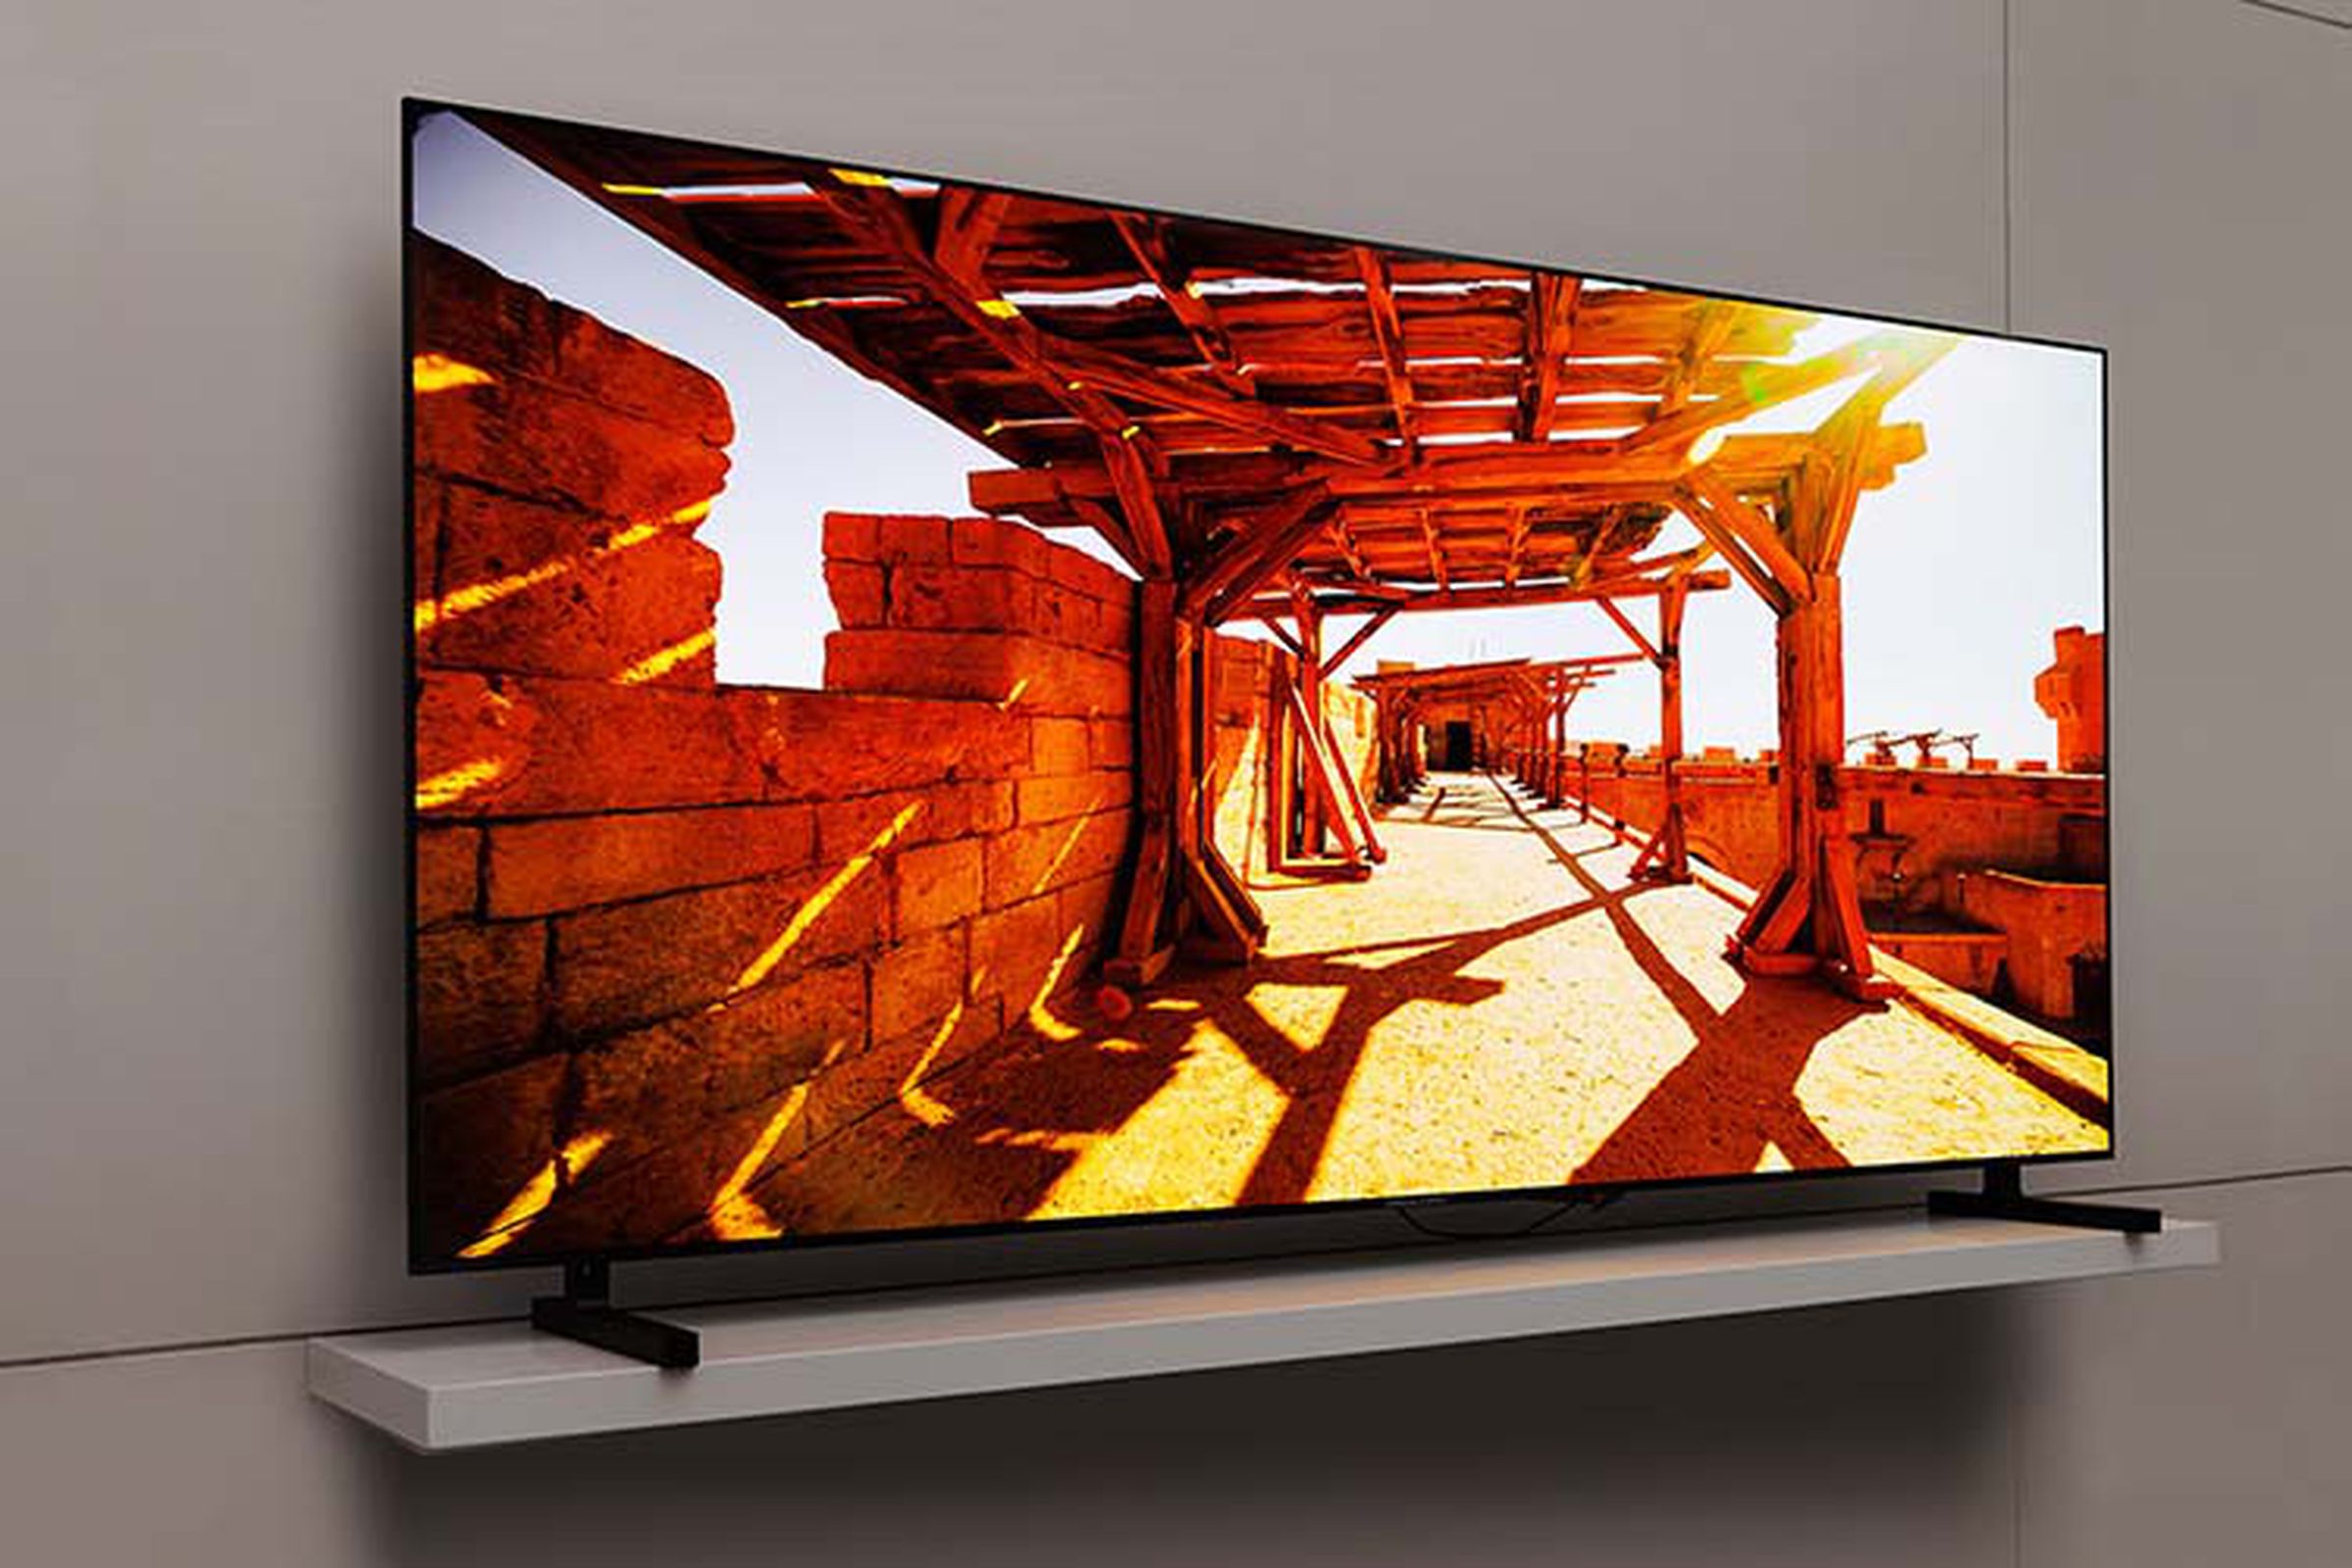 Samsung Display’s 77-inch QD-OLED TV panel.